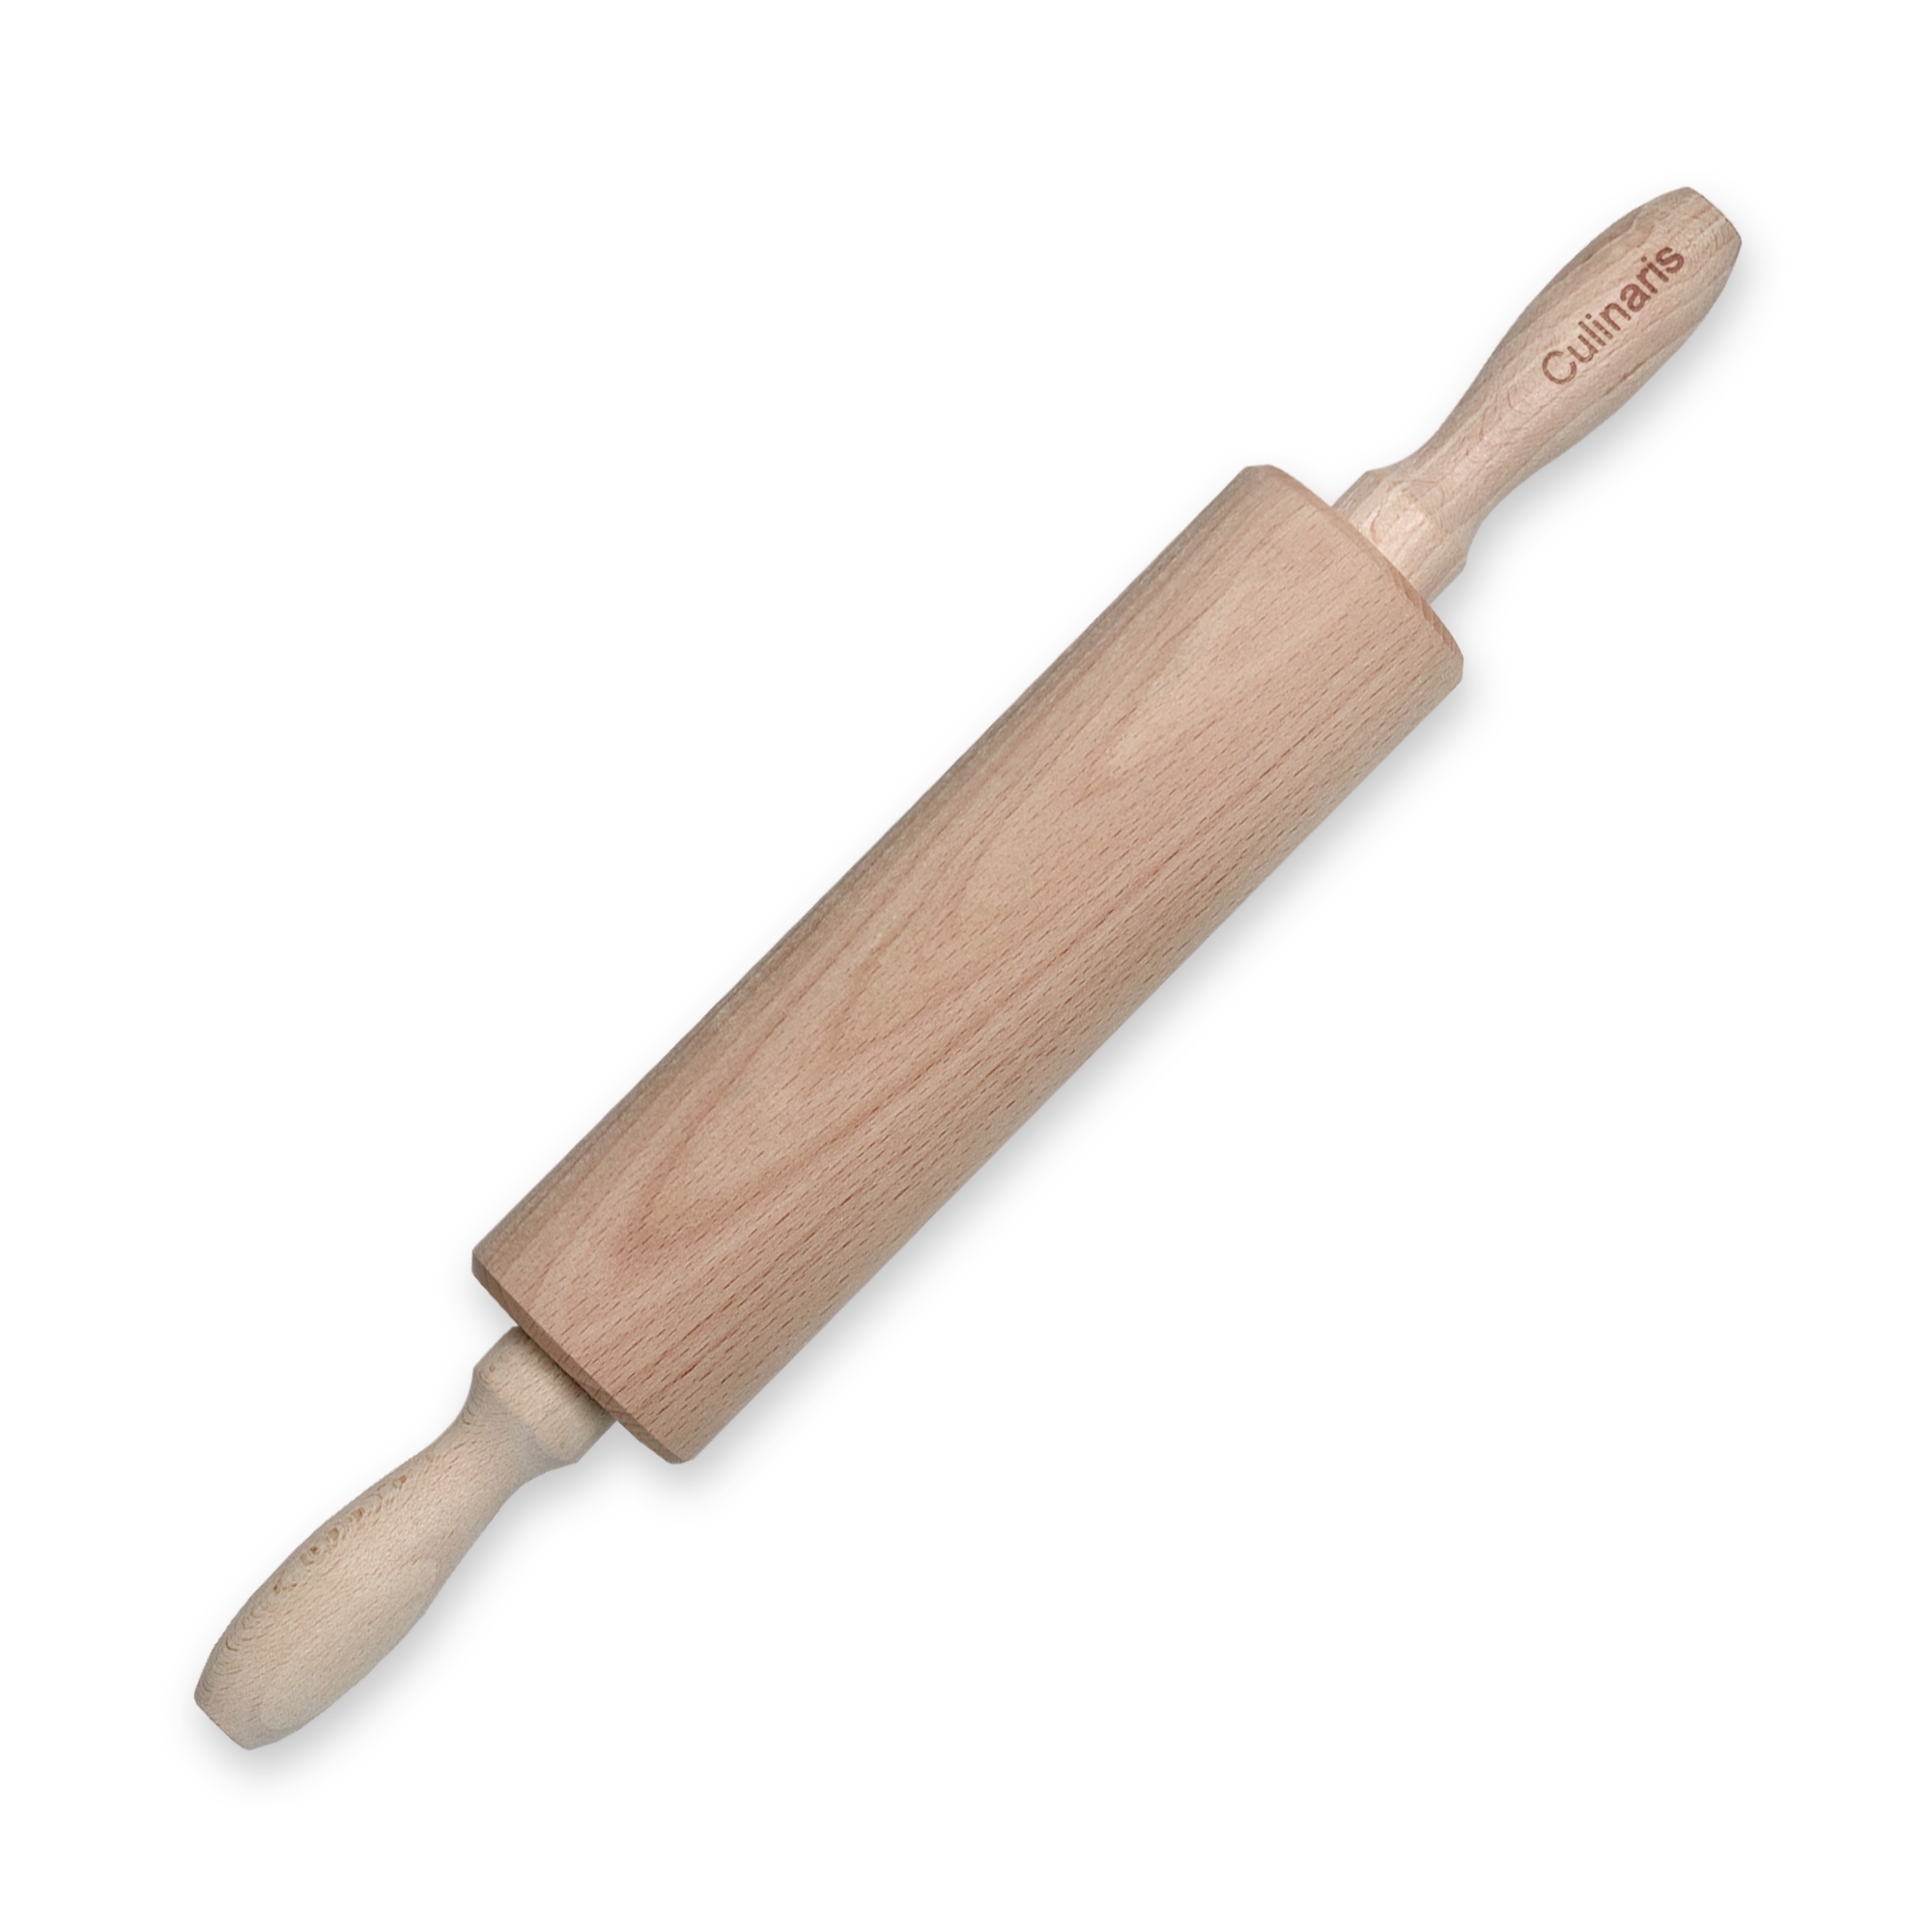 Culinaris - Rolling pin tall beech wood